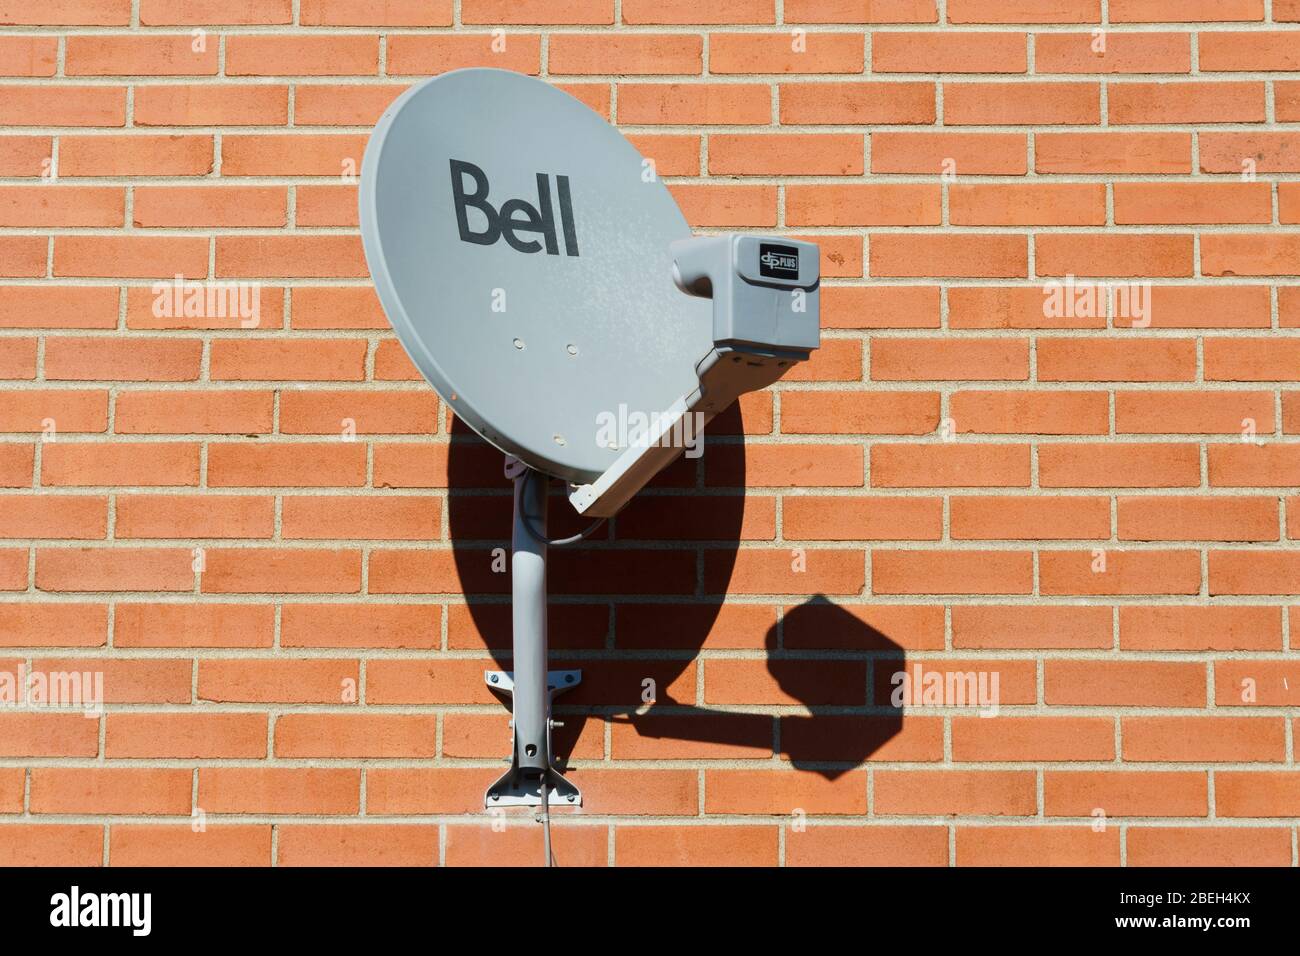 Broadband Bell satellite dish on a red brick wall. Stock Photo